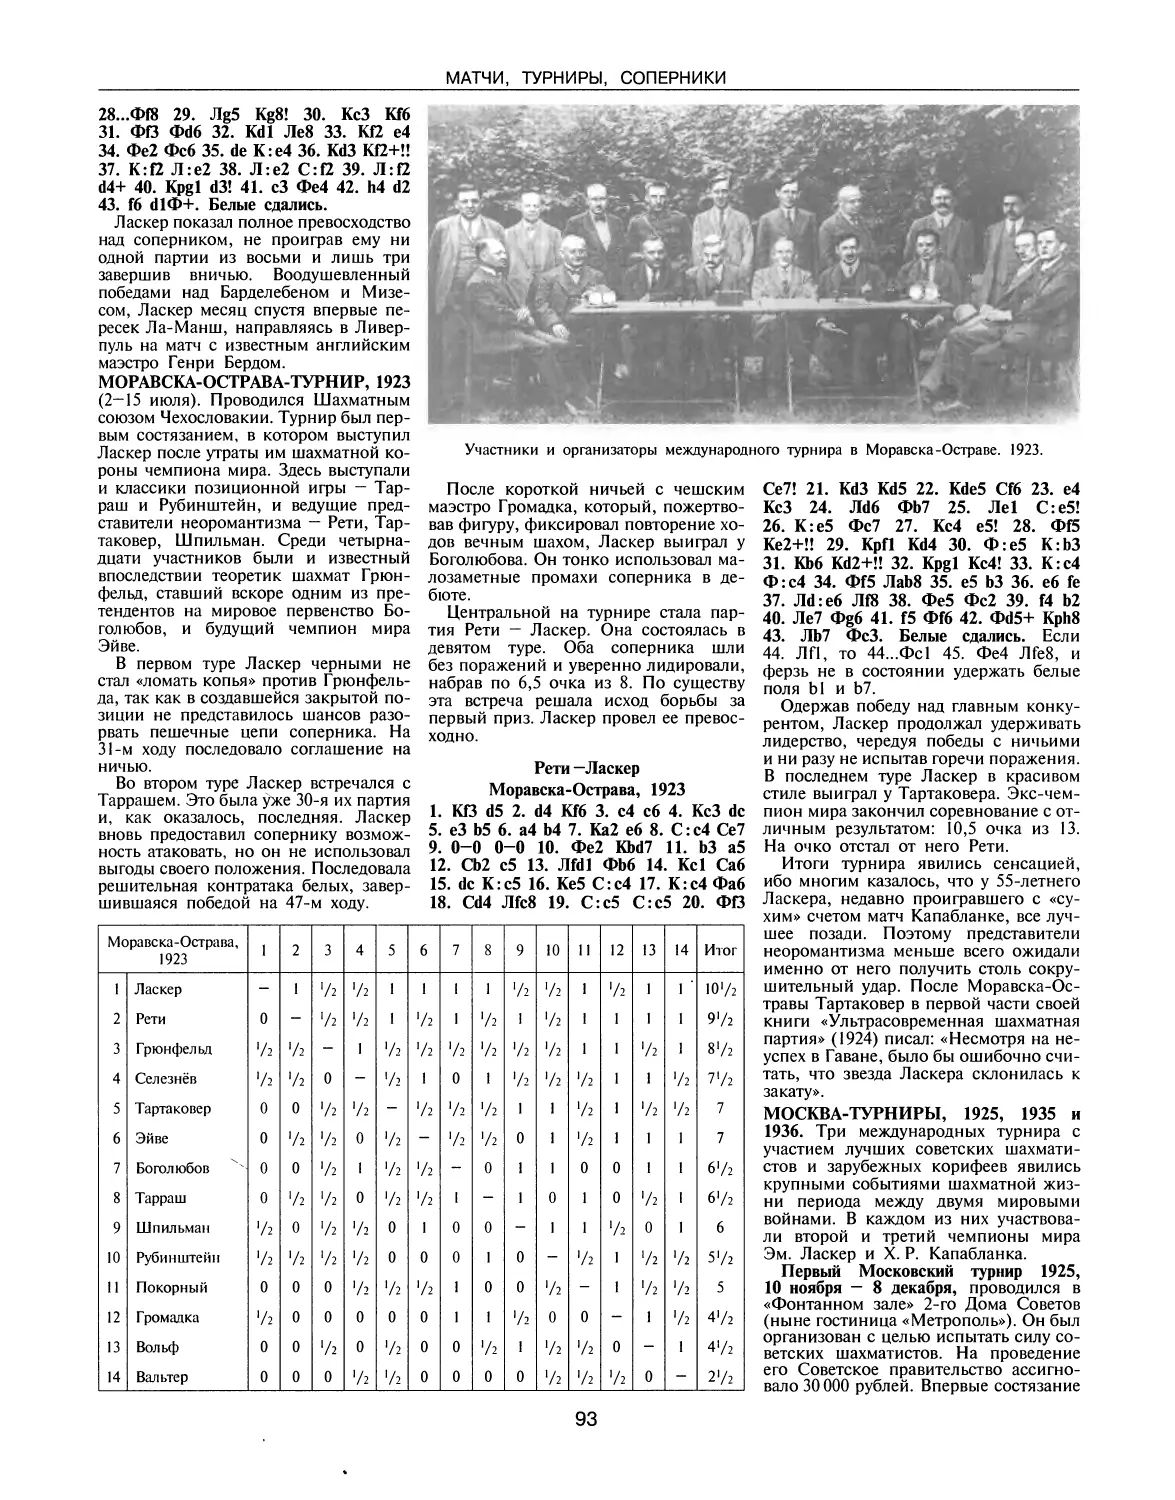 Моравска-Острава-турнир, 1923
Москва-турниры, 1925, 1935, 1936